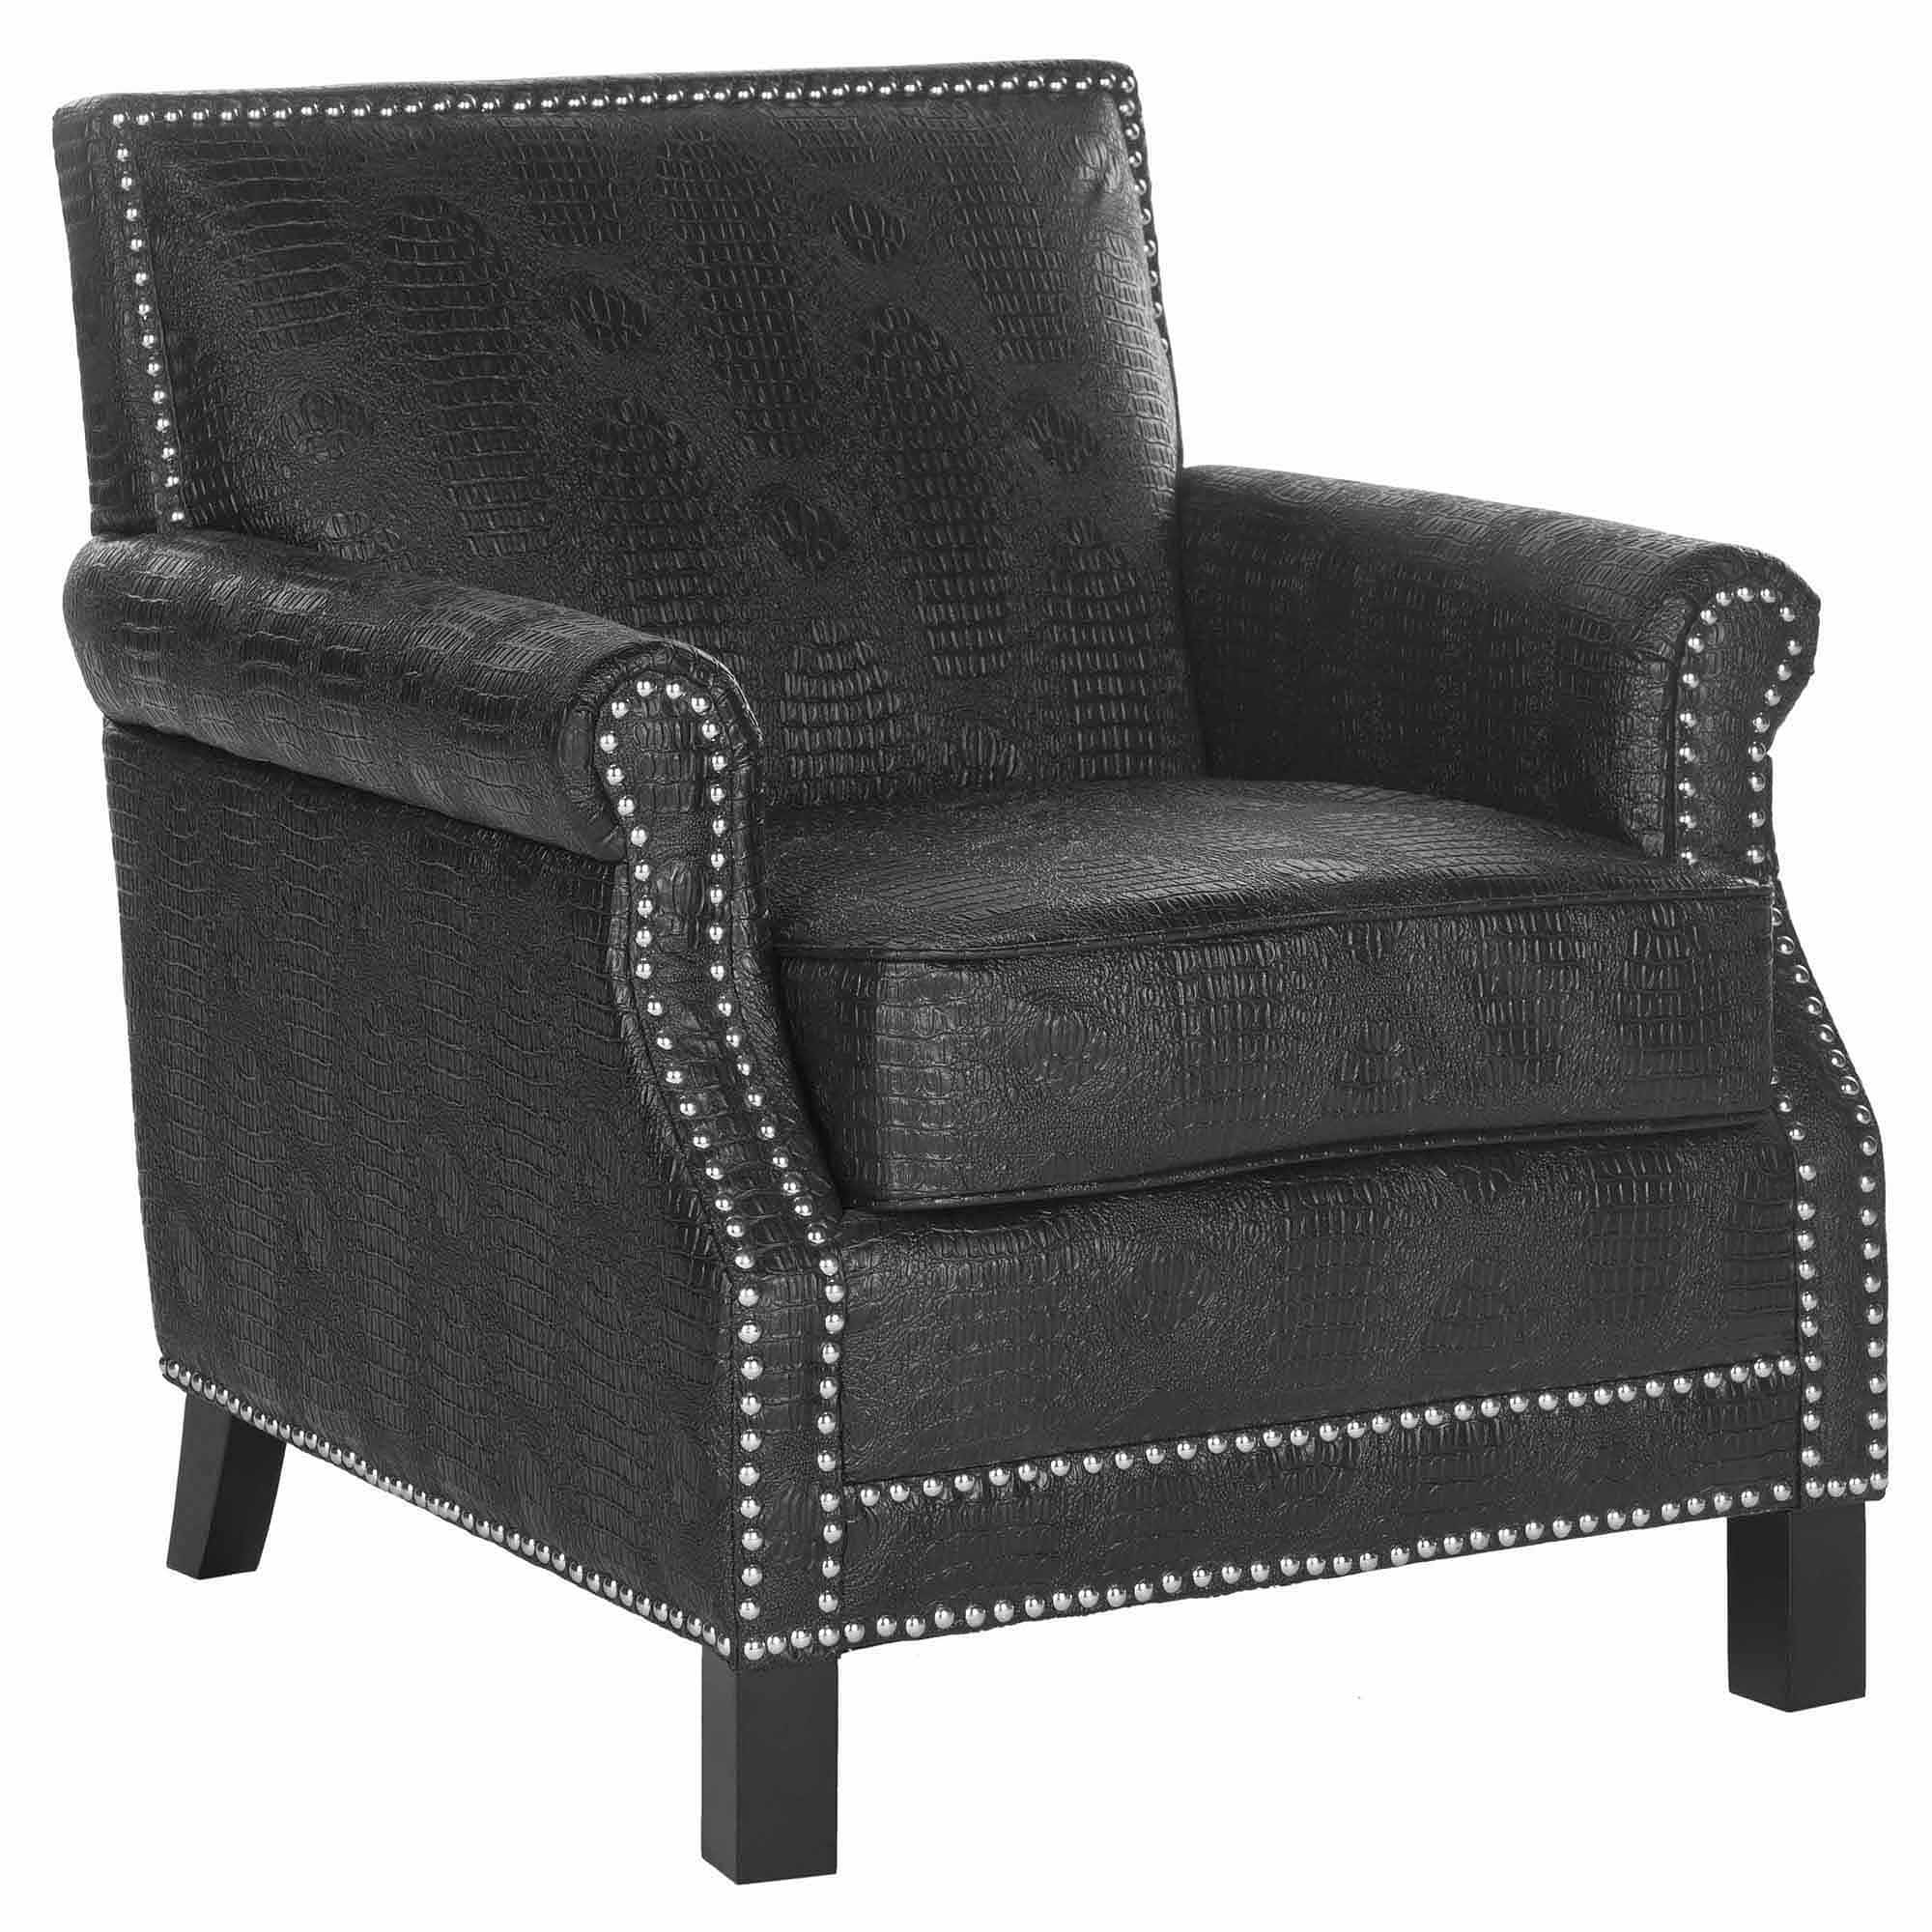 SAFAVIEH Easton Rustic Glam Upholstered Club Chair w/ Nailheads, Black Crocodile - image 3 of 4